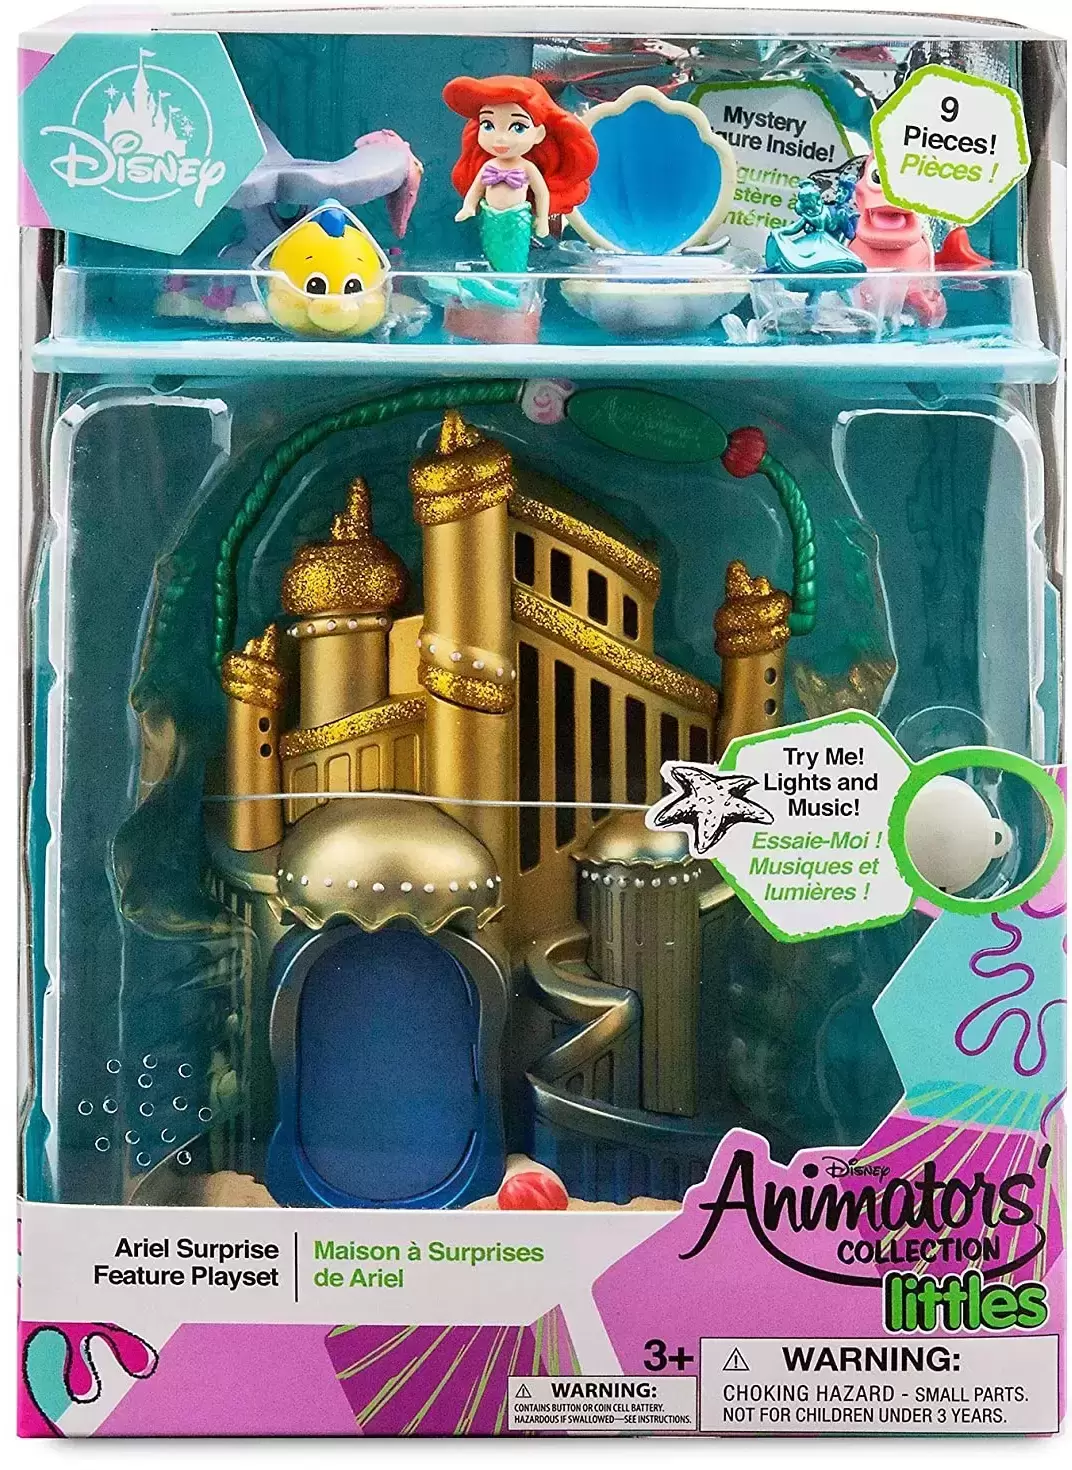 Animators Collection Littles / Playsets - Animators - Surprise Feature Playset - Ariel